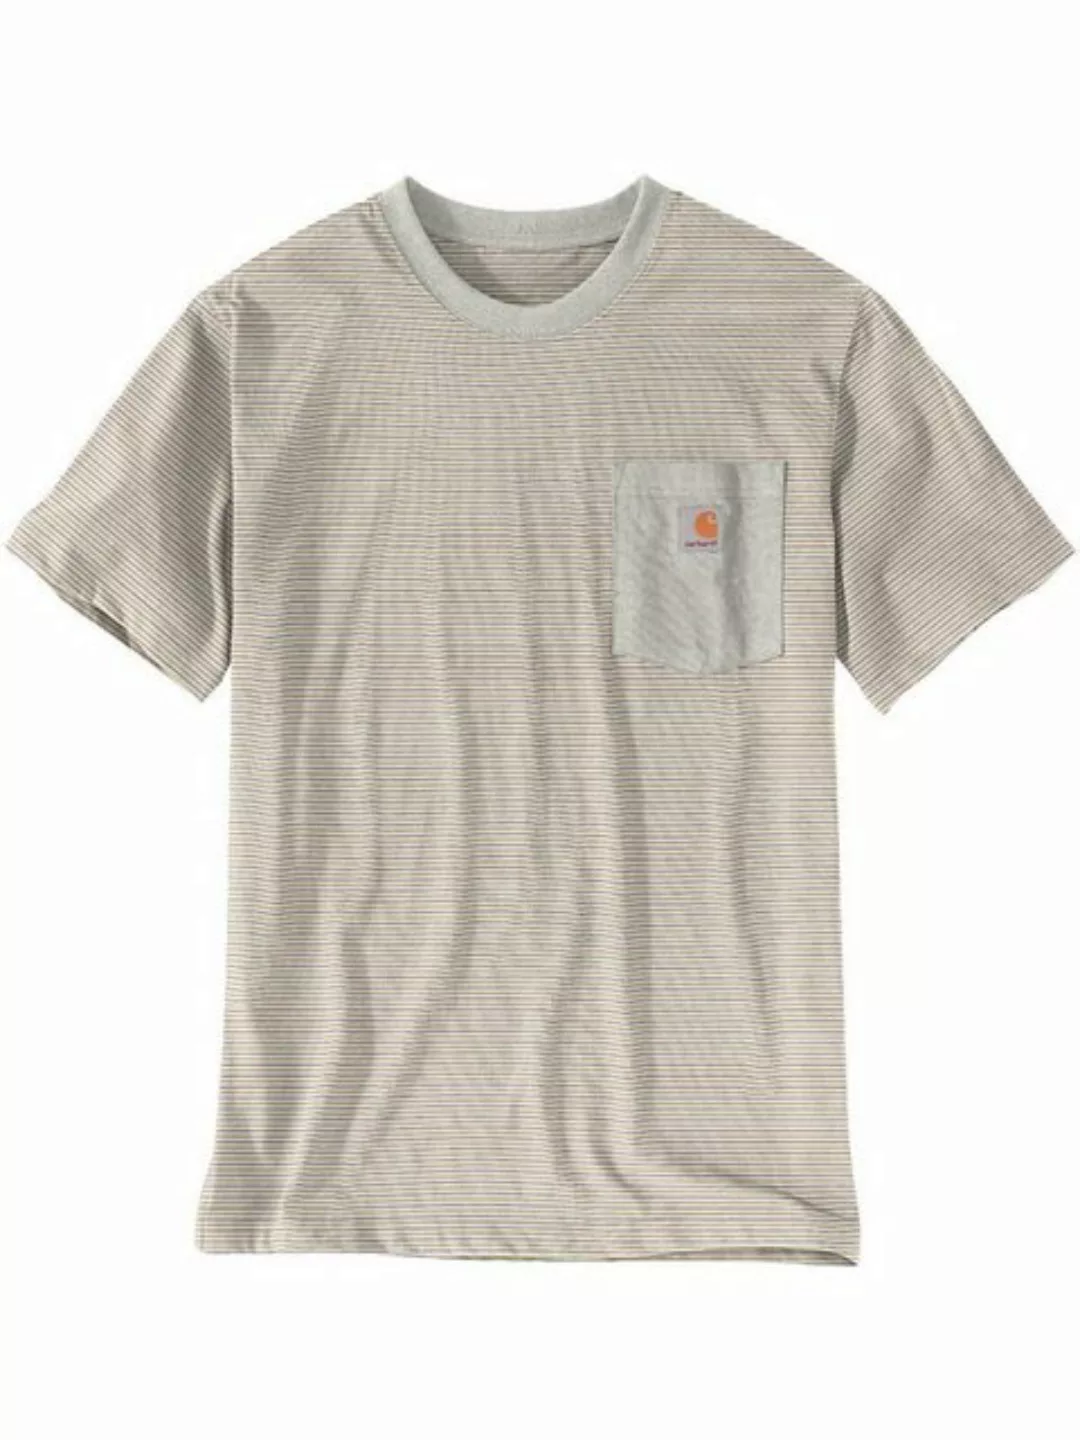 Carhartt T-Shirt 106145-W29 Carhartt Pocket günstig online kaufen